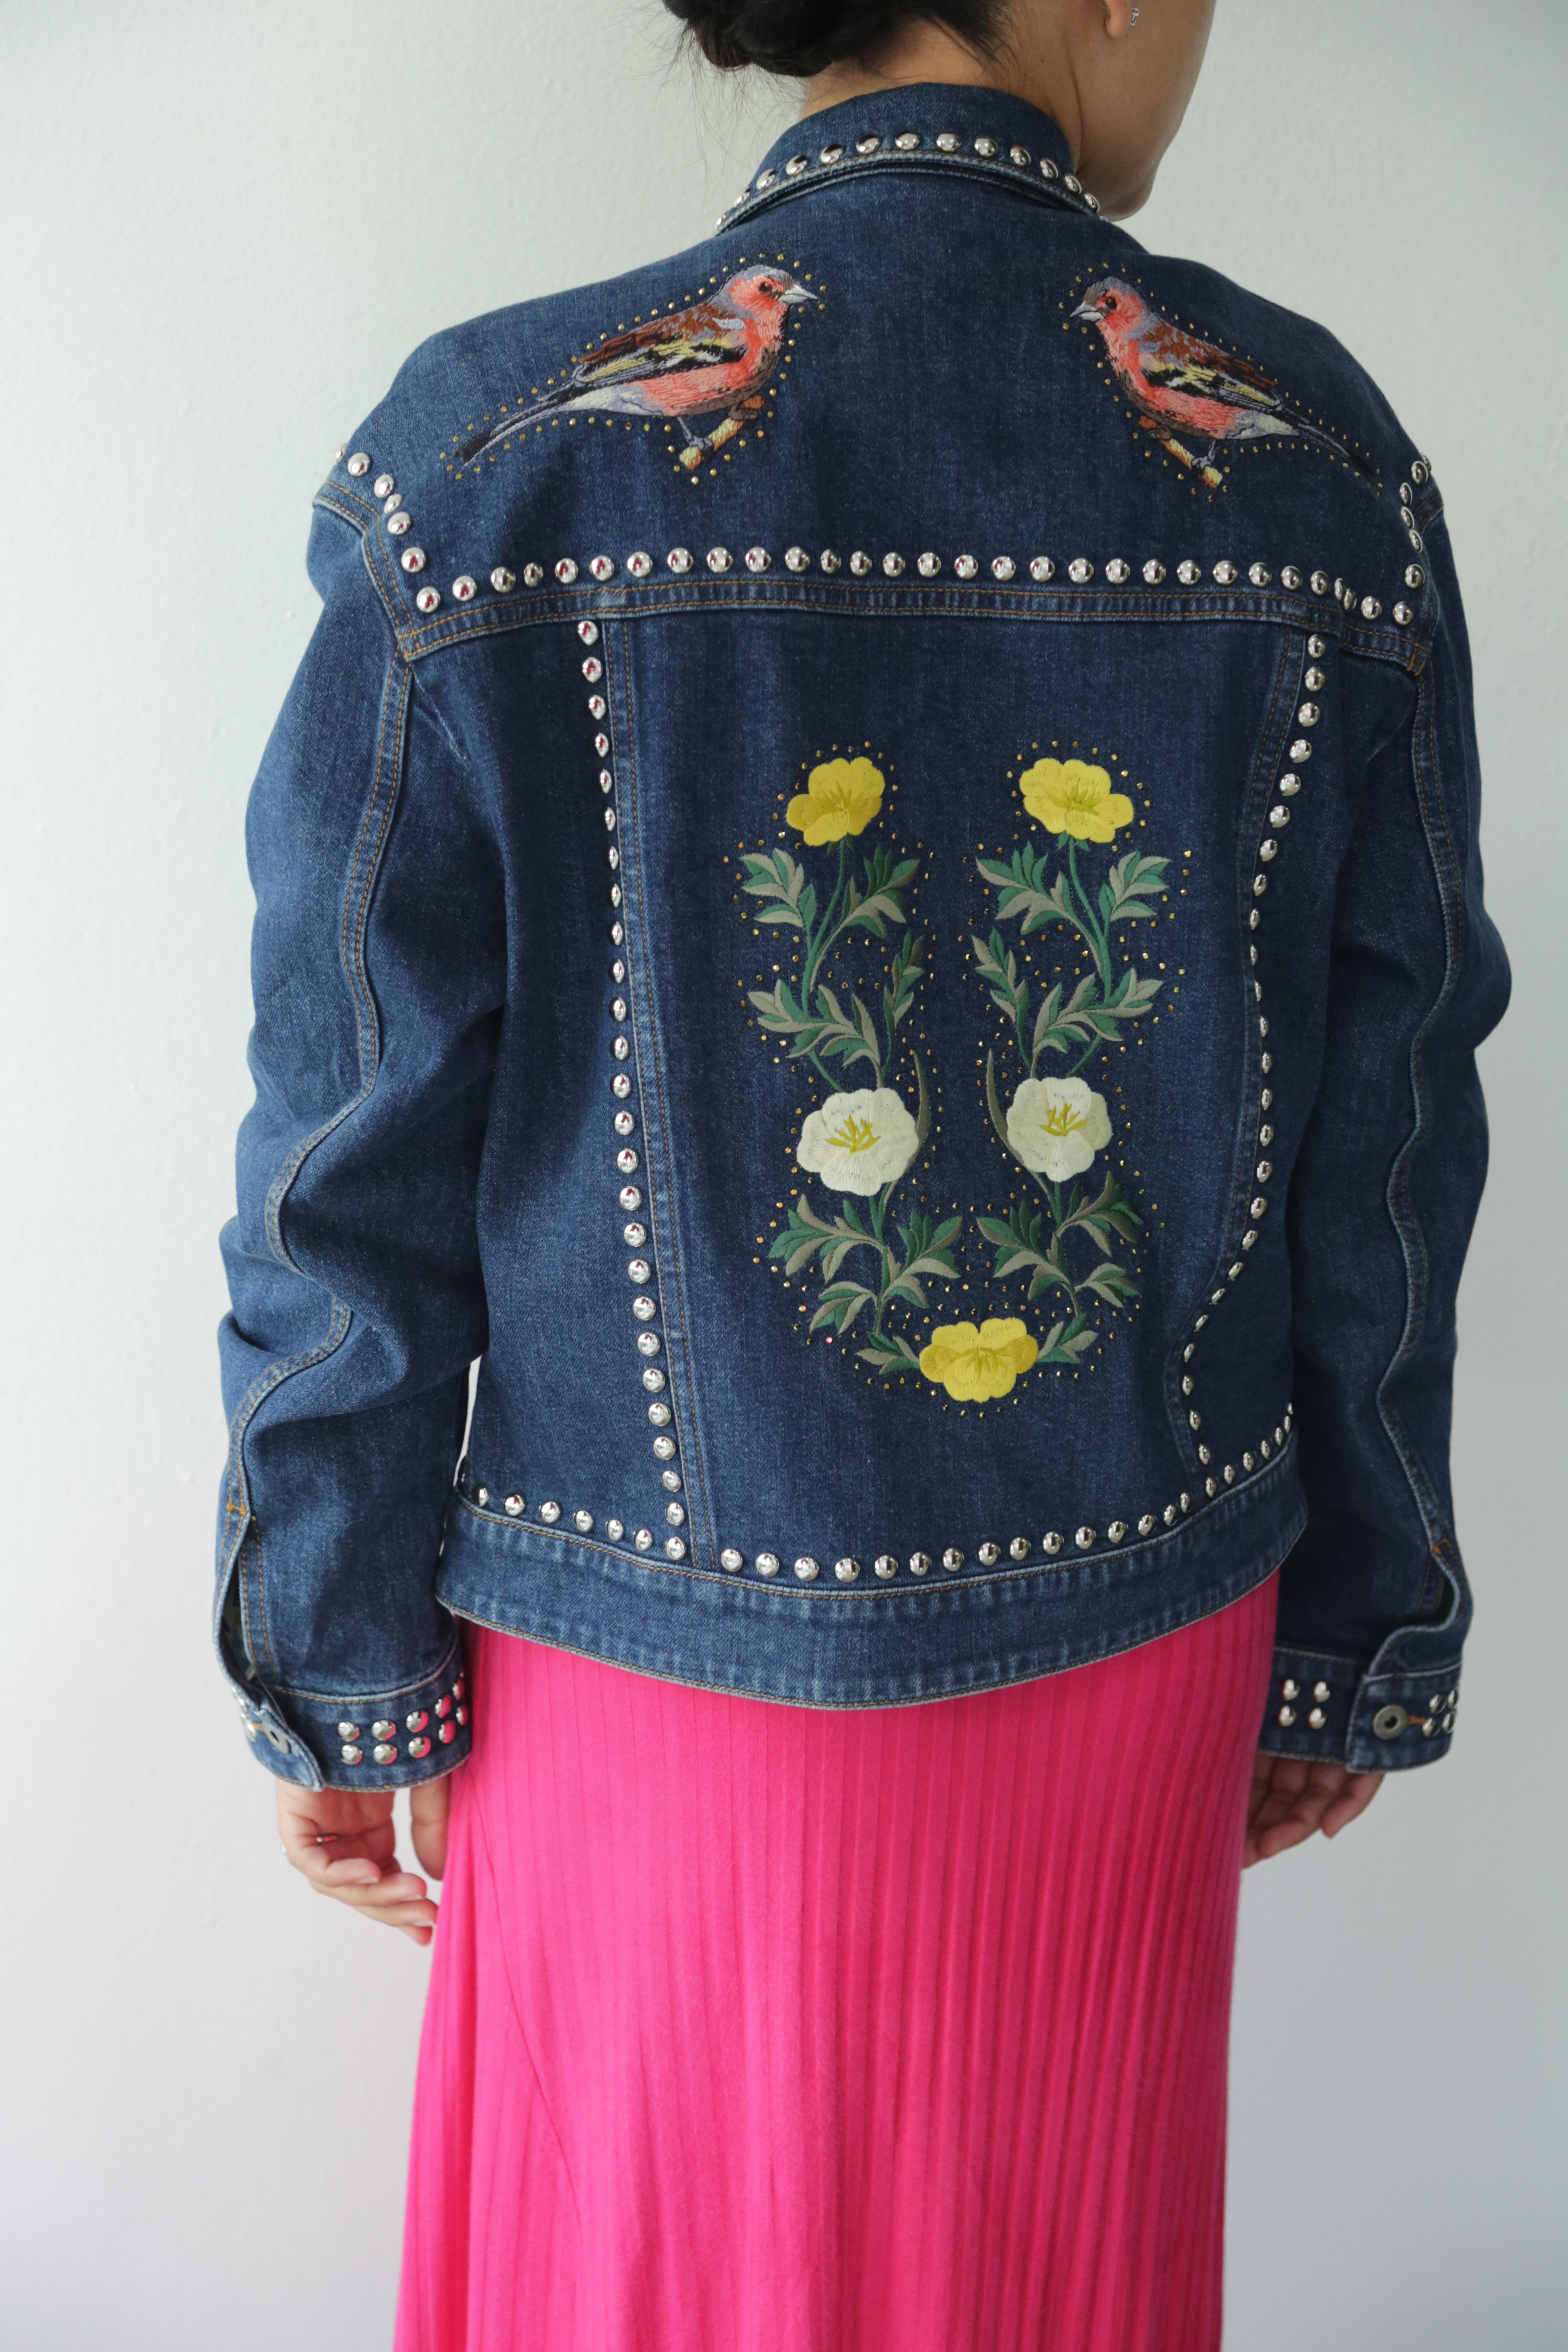 stella mccartney floral jacket